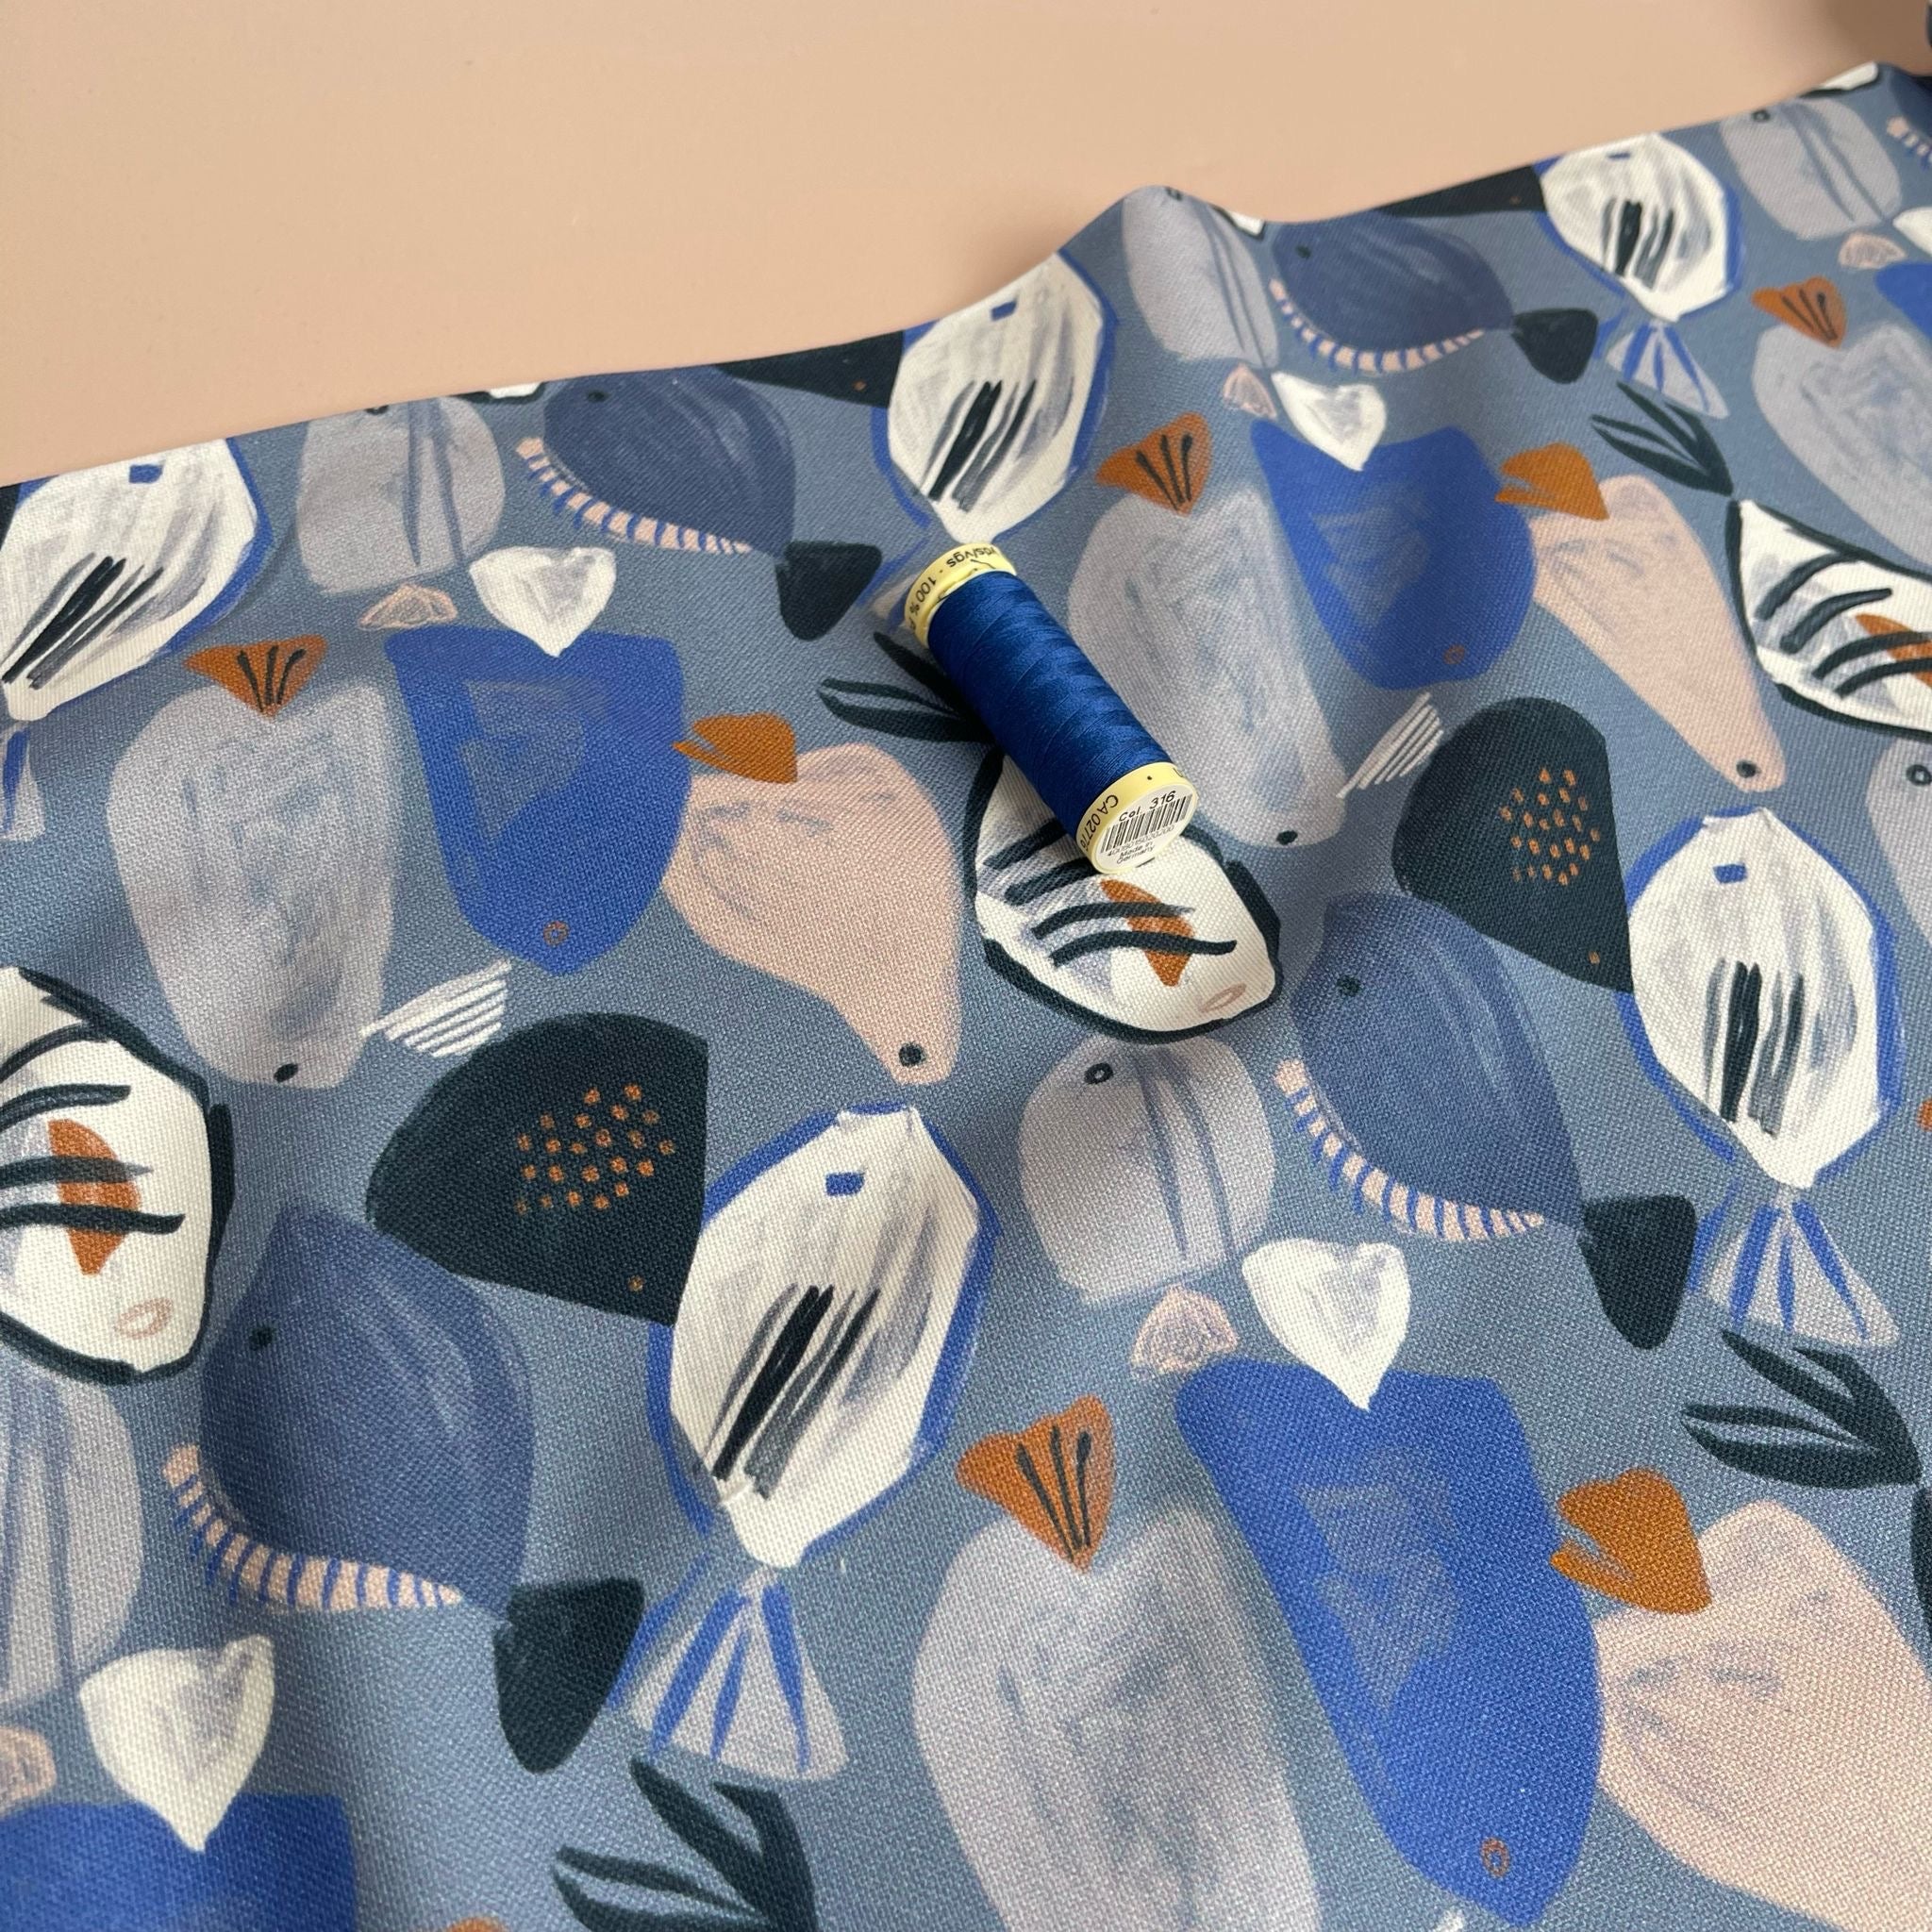 REMNANT 1.74 Metres - Maritime Blue Cotton Canvas Fabric